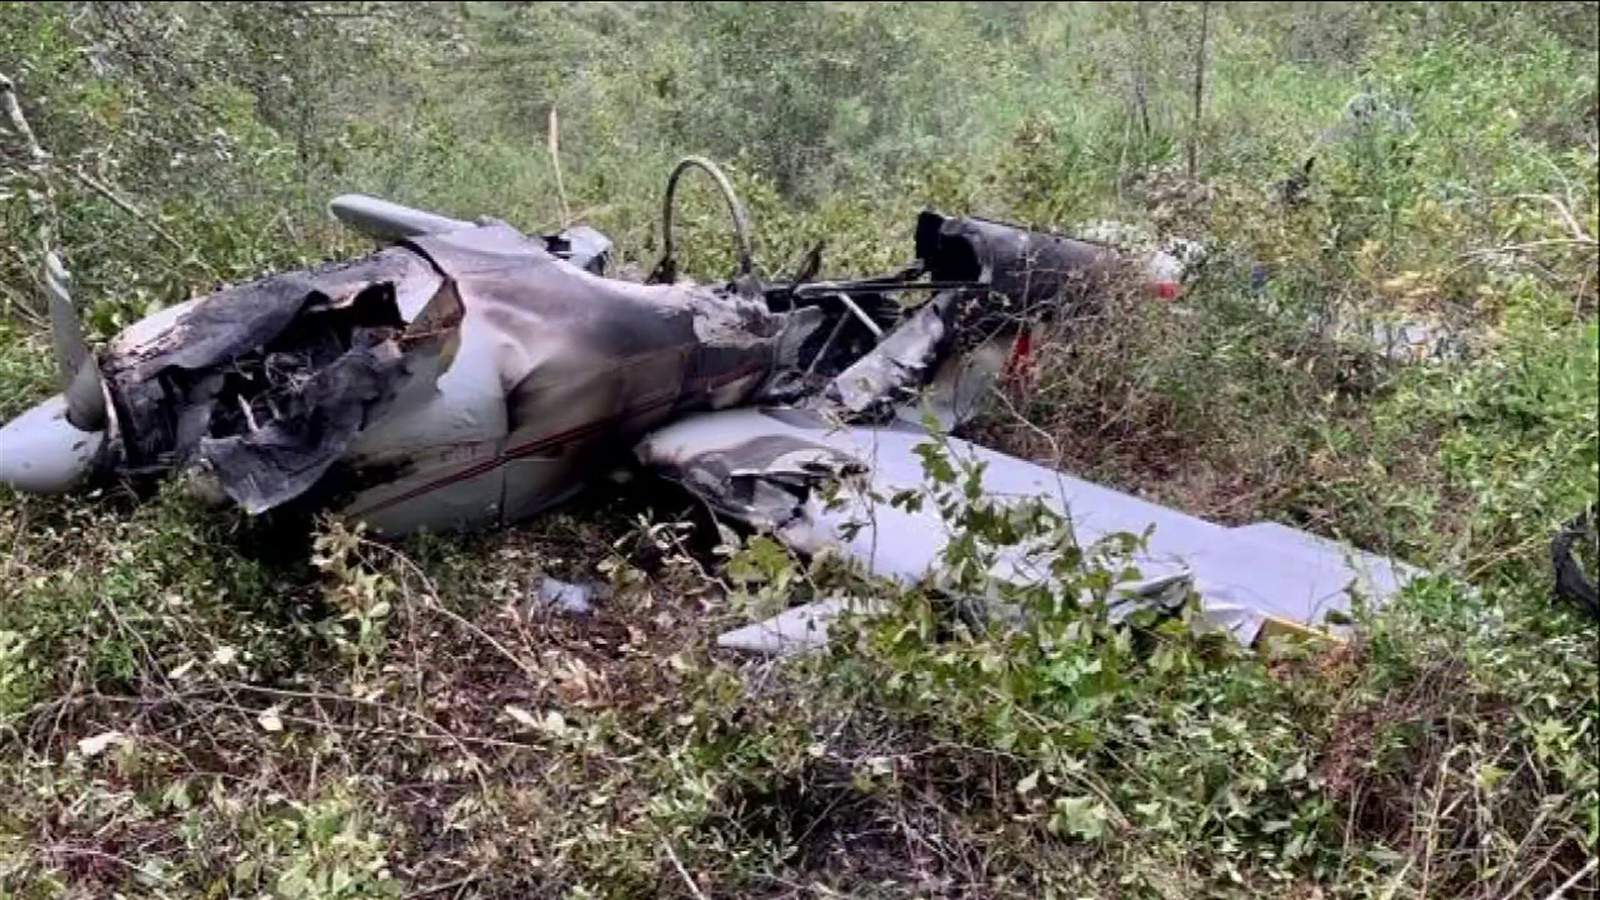 Photo of plane crash wreckage provides clues for investigators, aviation expert says